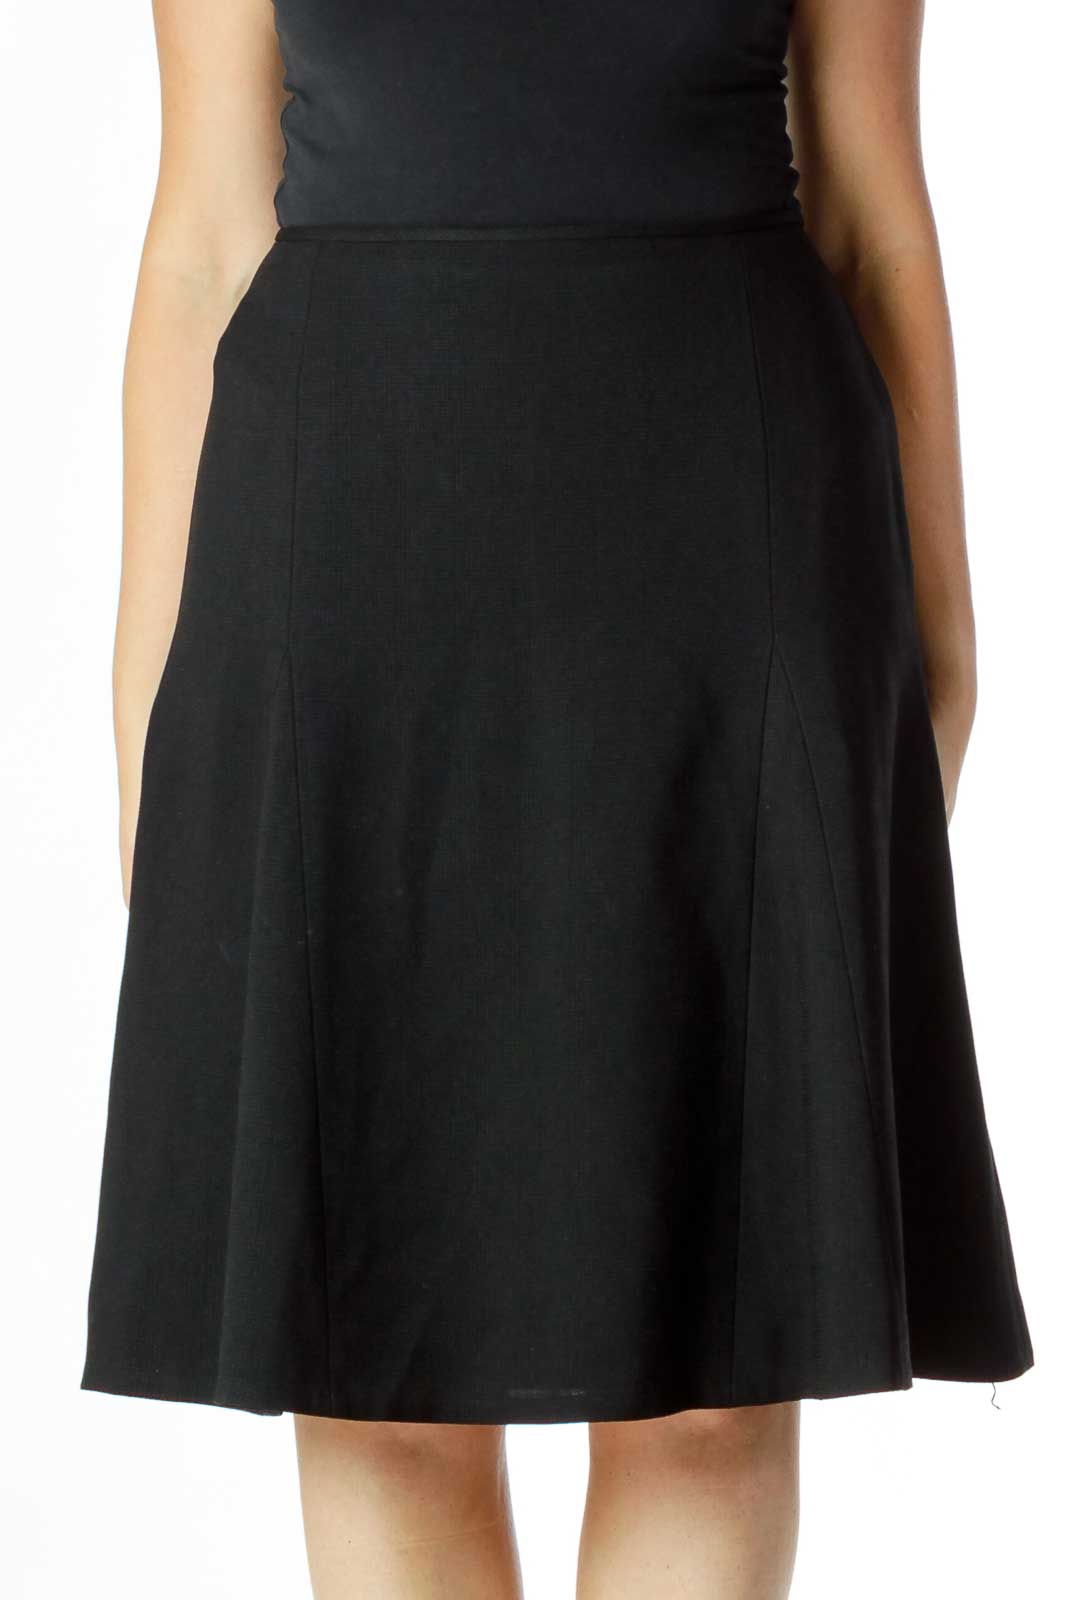 Black A-Line Skirt Front